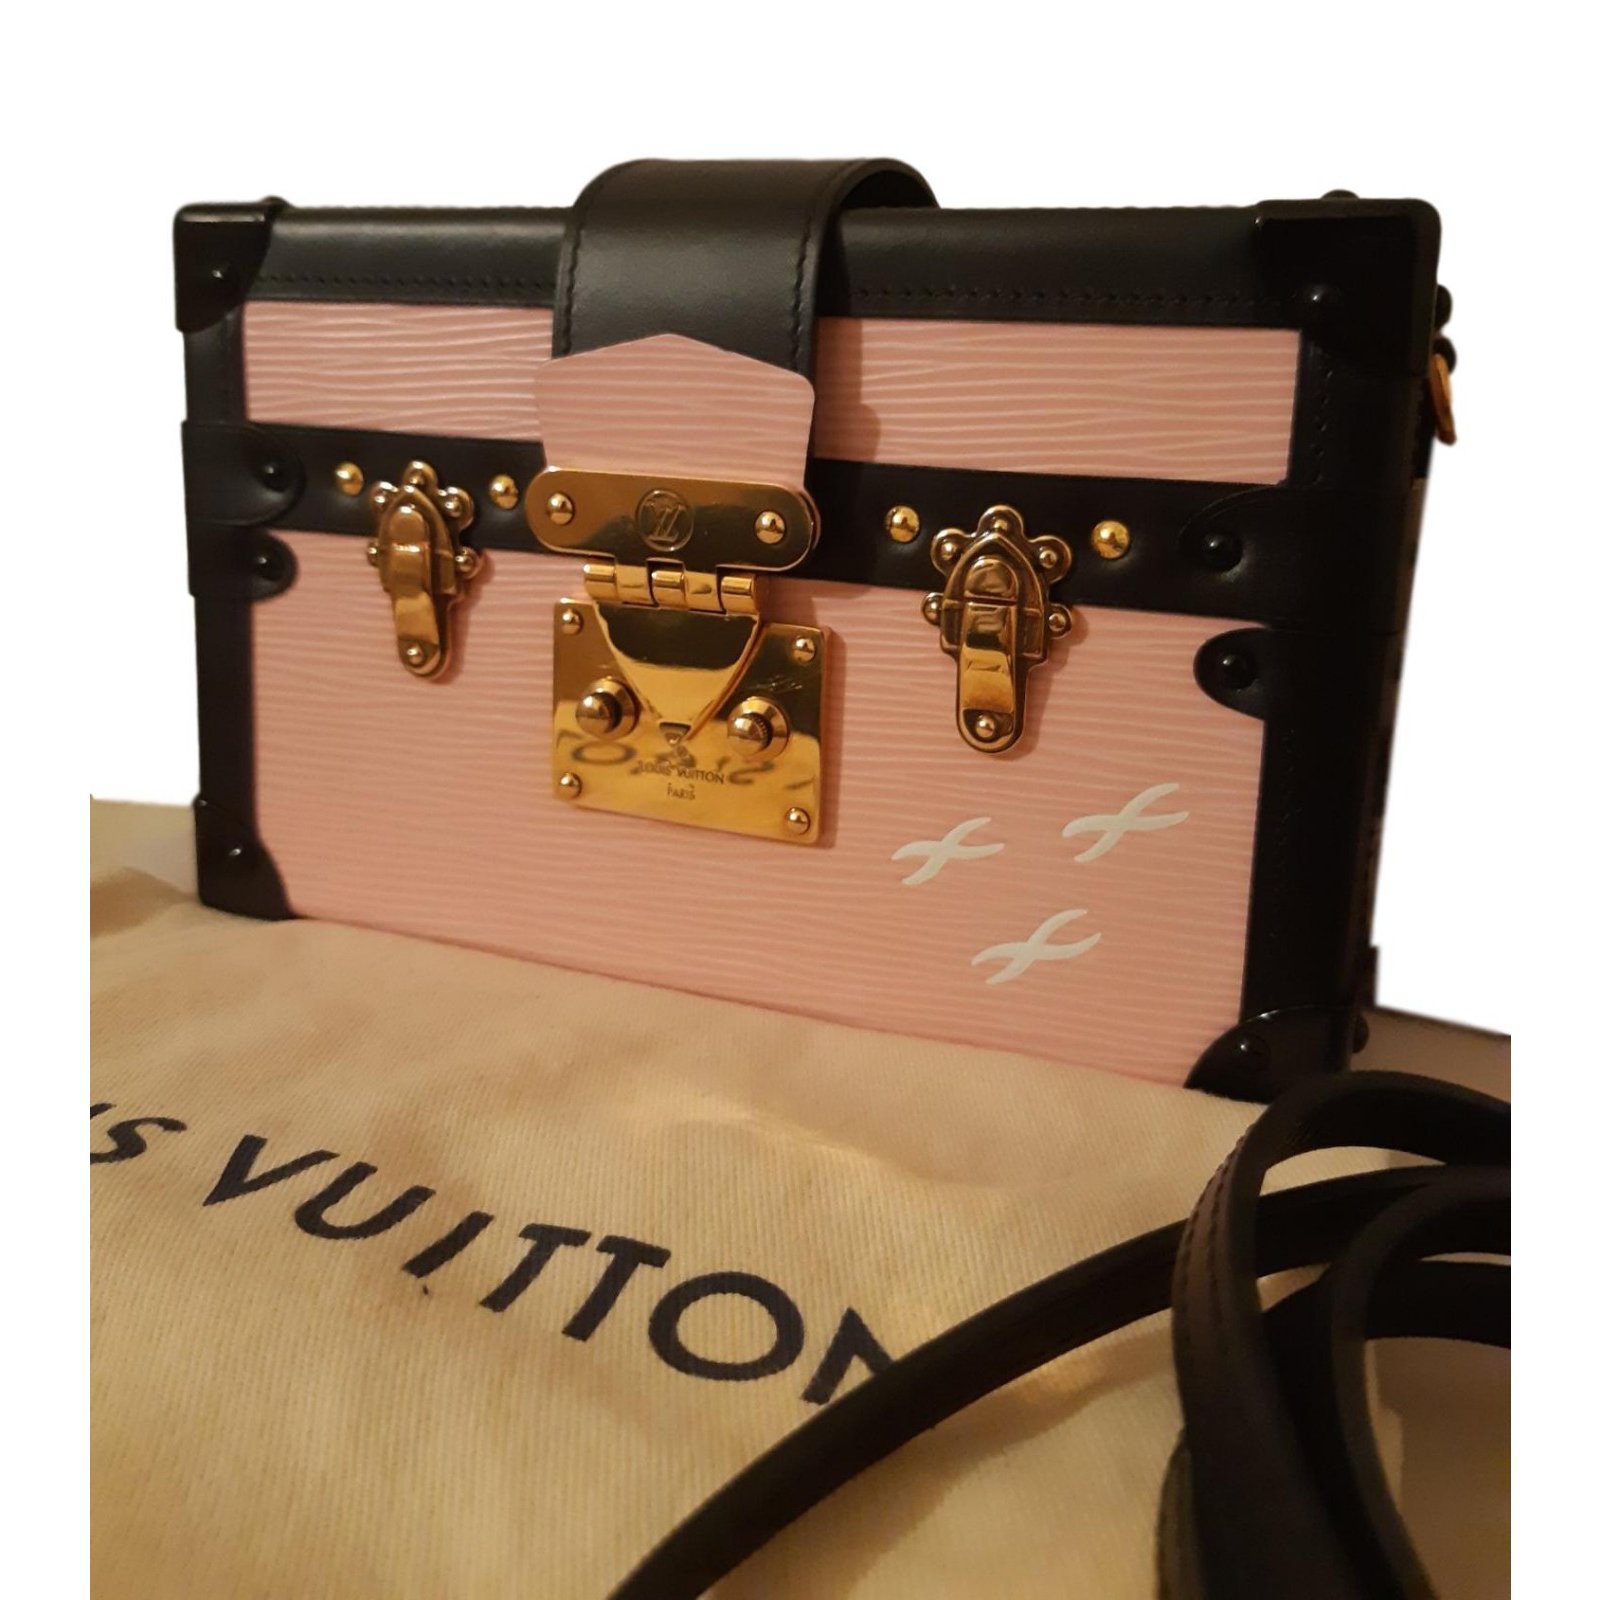 Louis Vuitton Black/Pink Epi Leather Petite Malle Bag Louis Vuitton